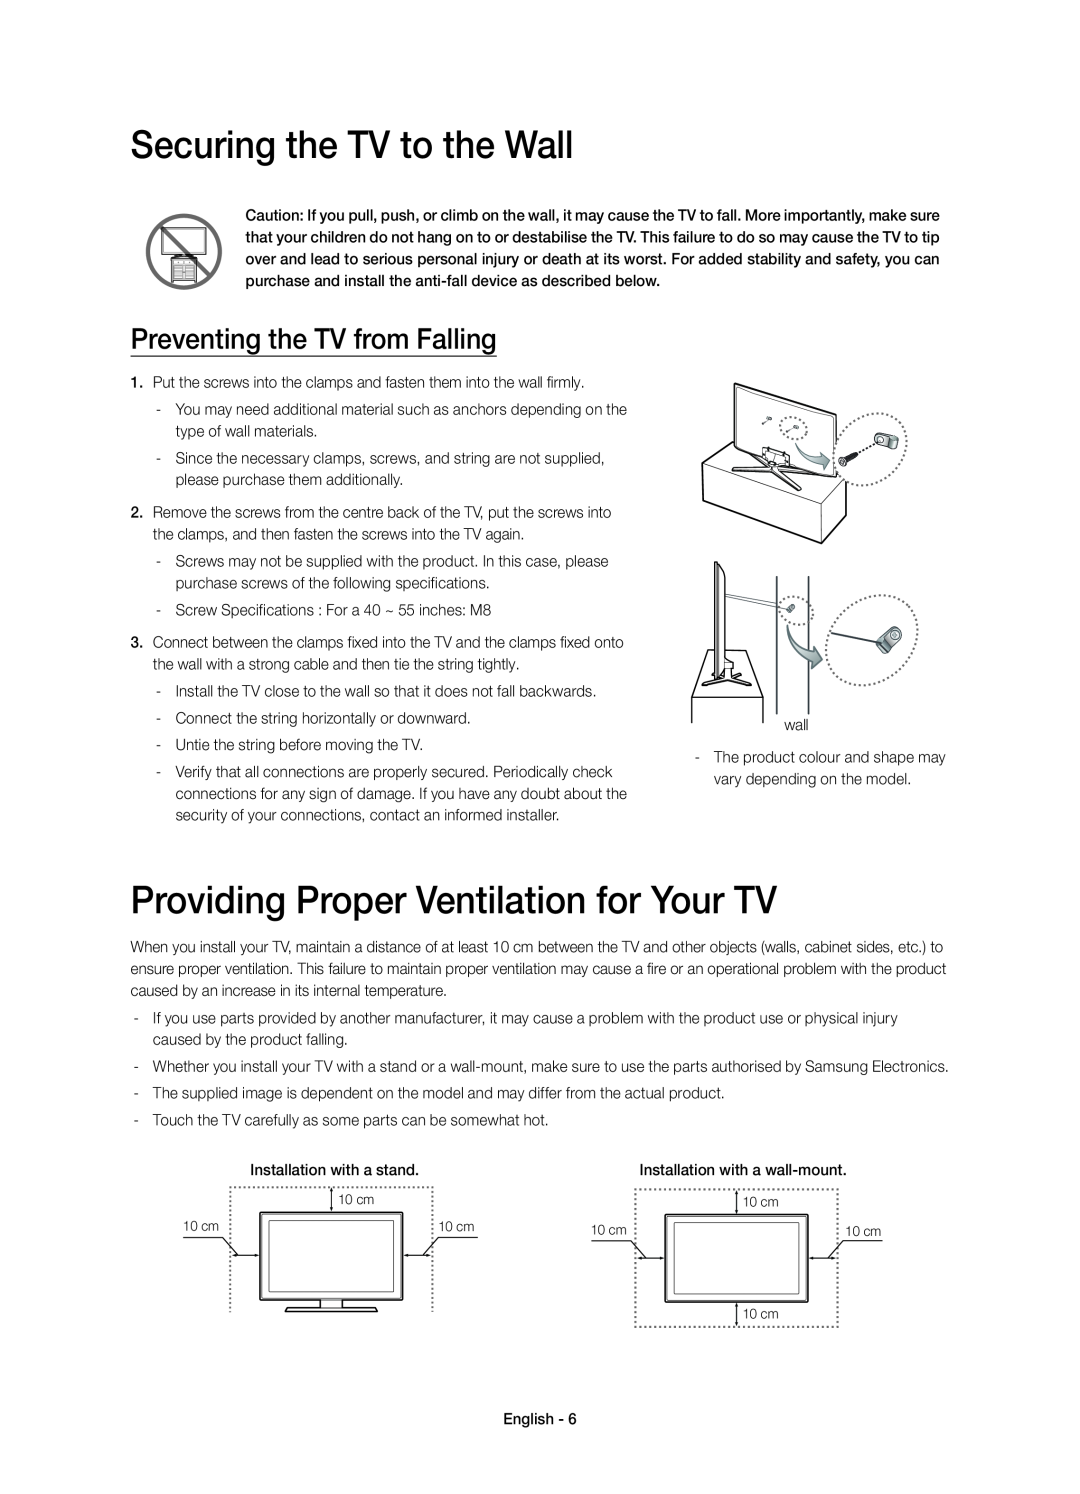 Samsung UE40H6700SLXXH, UE55H6700SLXXH manual Securing the TV to the Wall, Providing Proper Ventilation for Your TV 